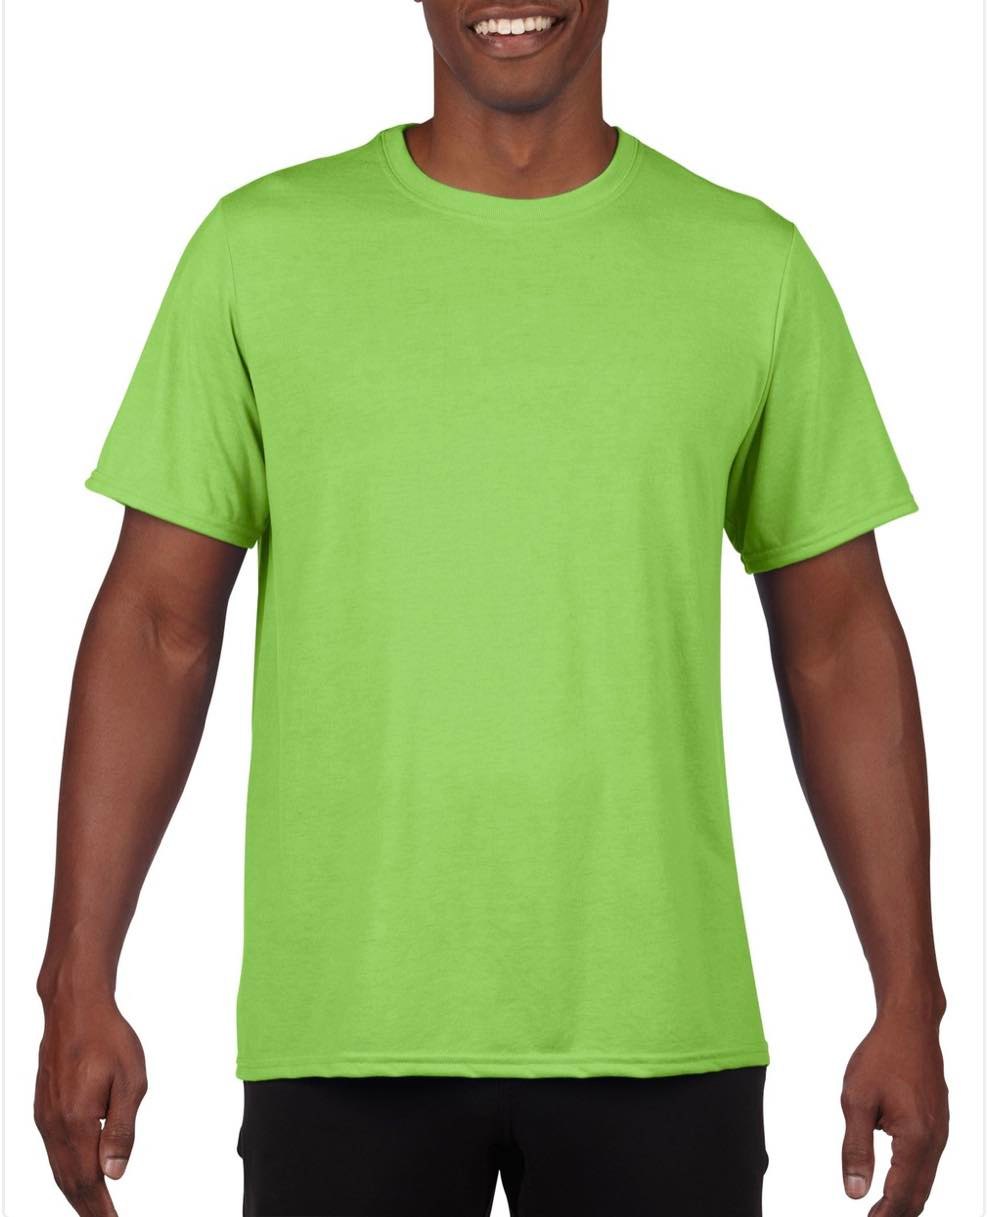 SPRING COLORS(GILDAN 42000) 100% Polyester Sublimation Ready T-shirts  COLORS (SEASONAL)